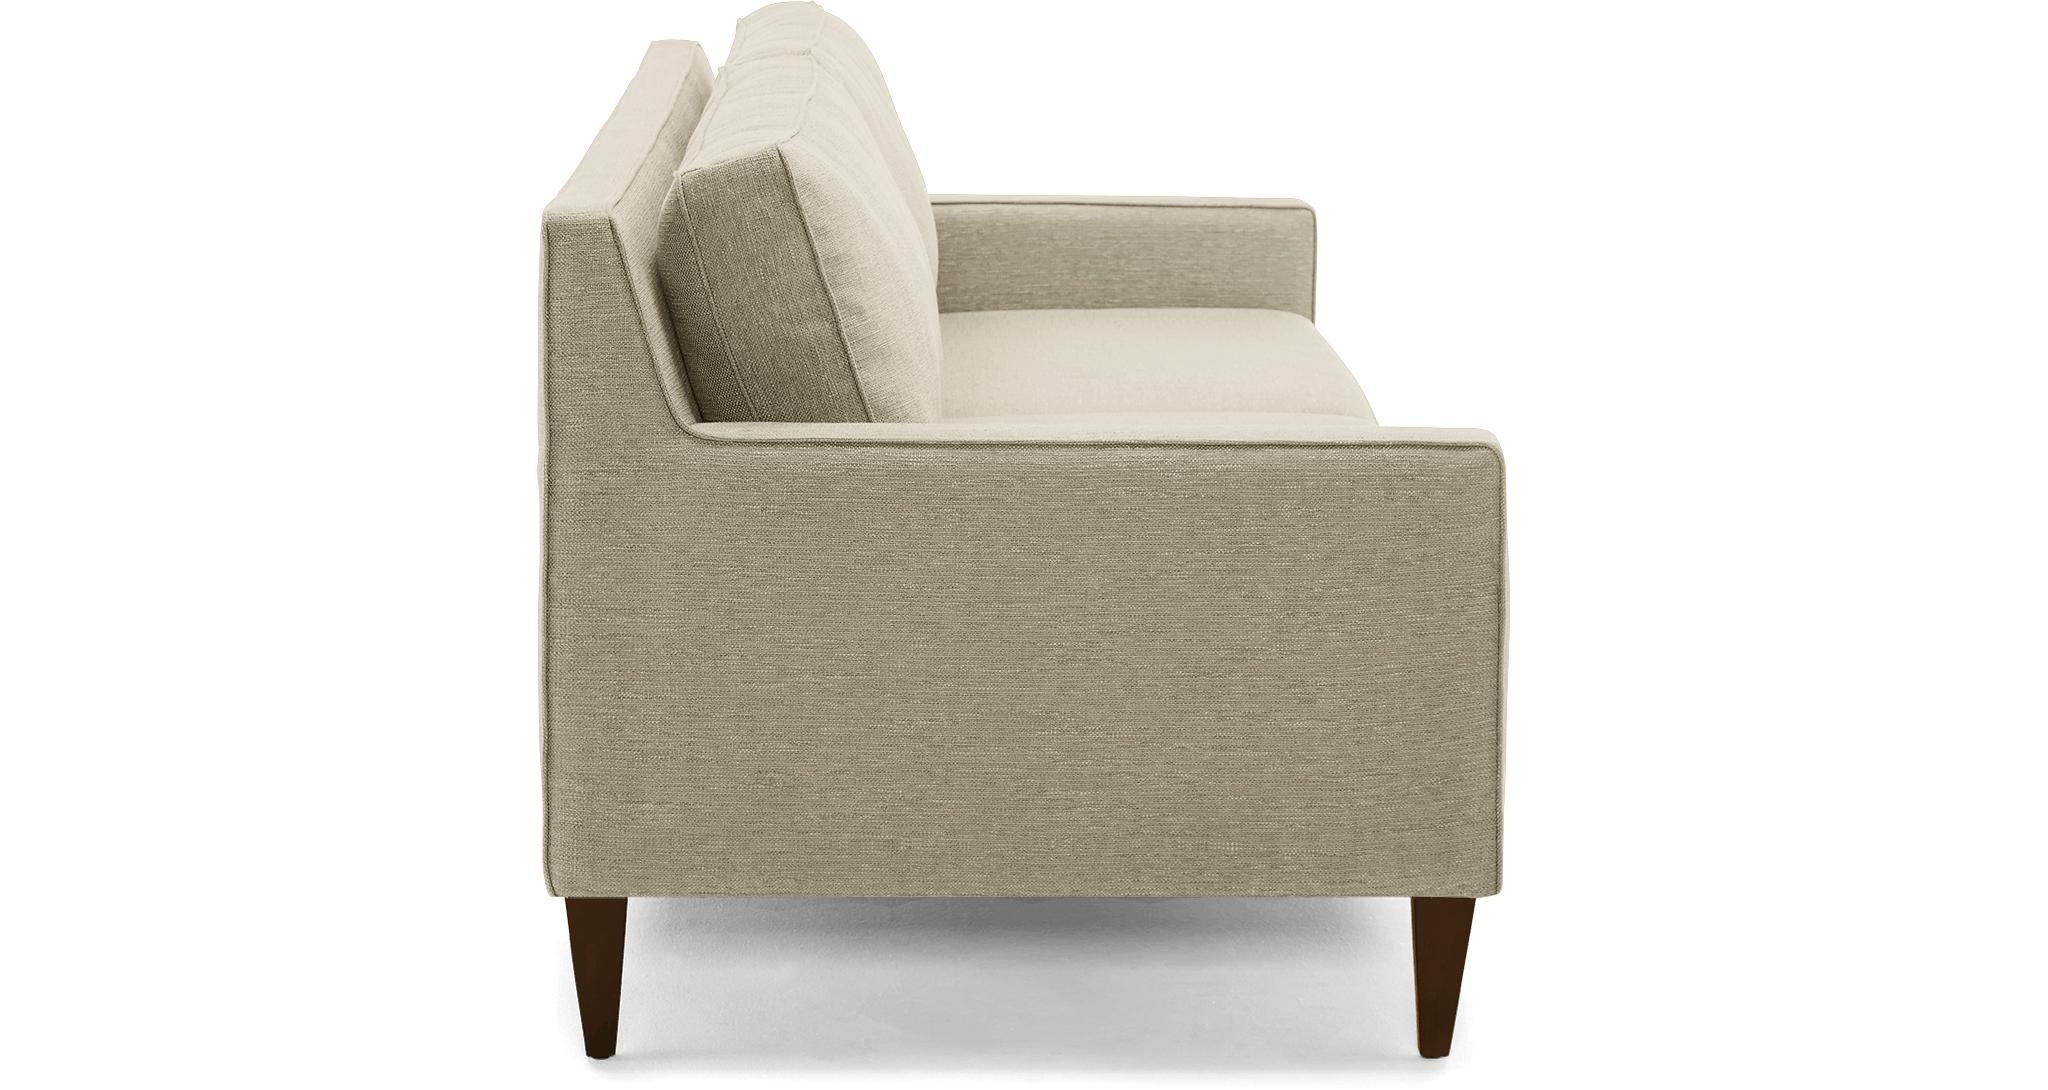 Gray Levi Mid Century Modern Sofa - Bloke Cotton - Mocha - Image 2